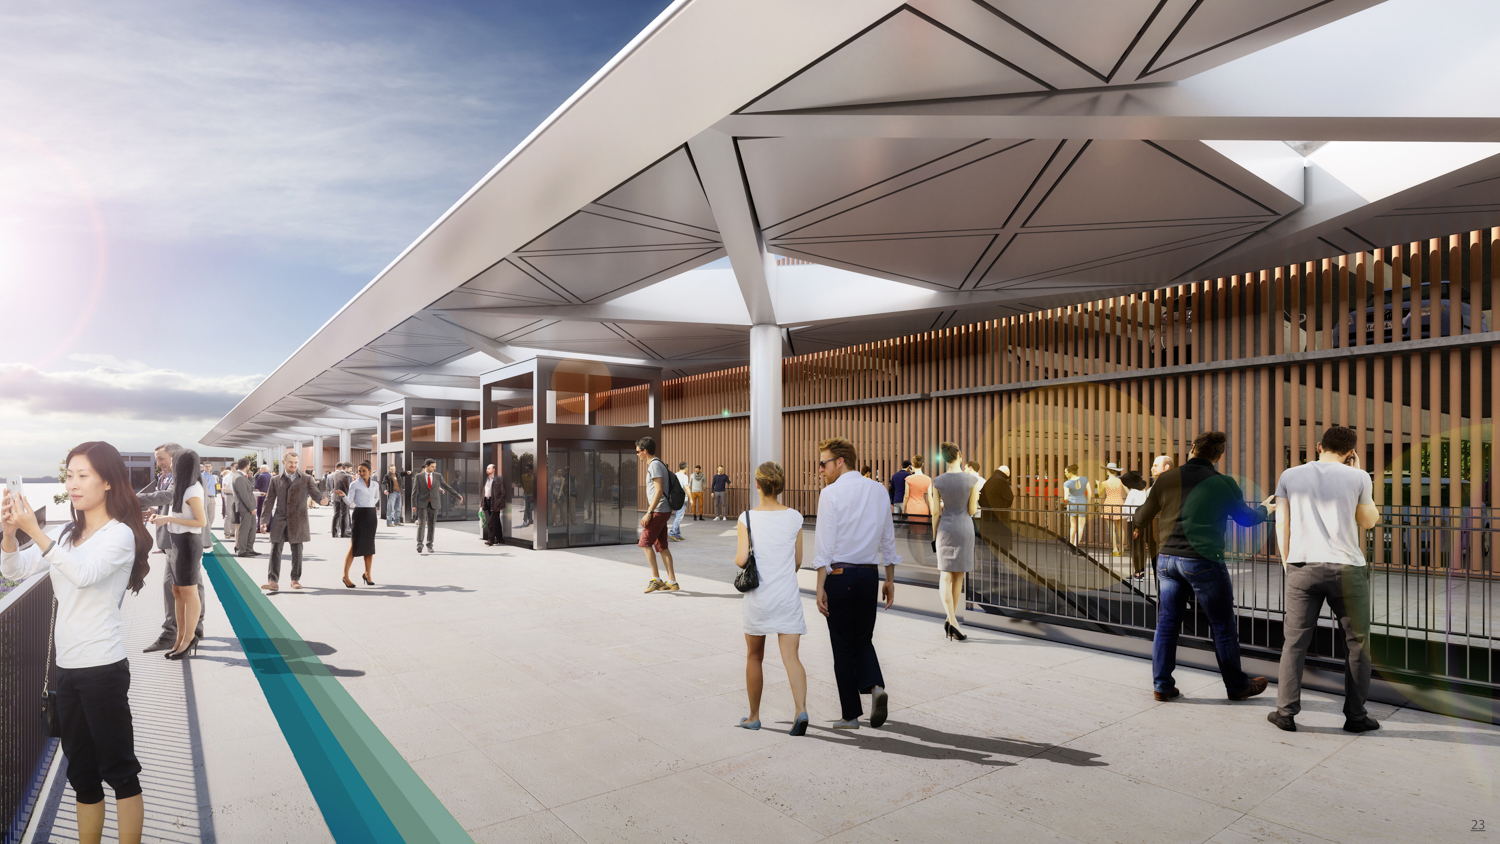 Santa Clara Station concourse and platform design option B with concrete and color accent flooring, image via VTA